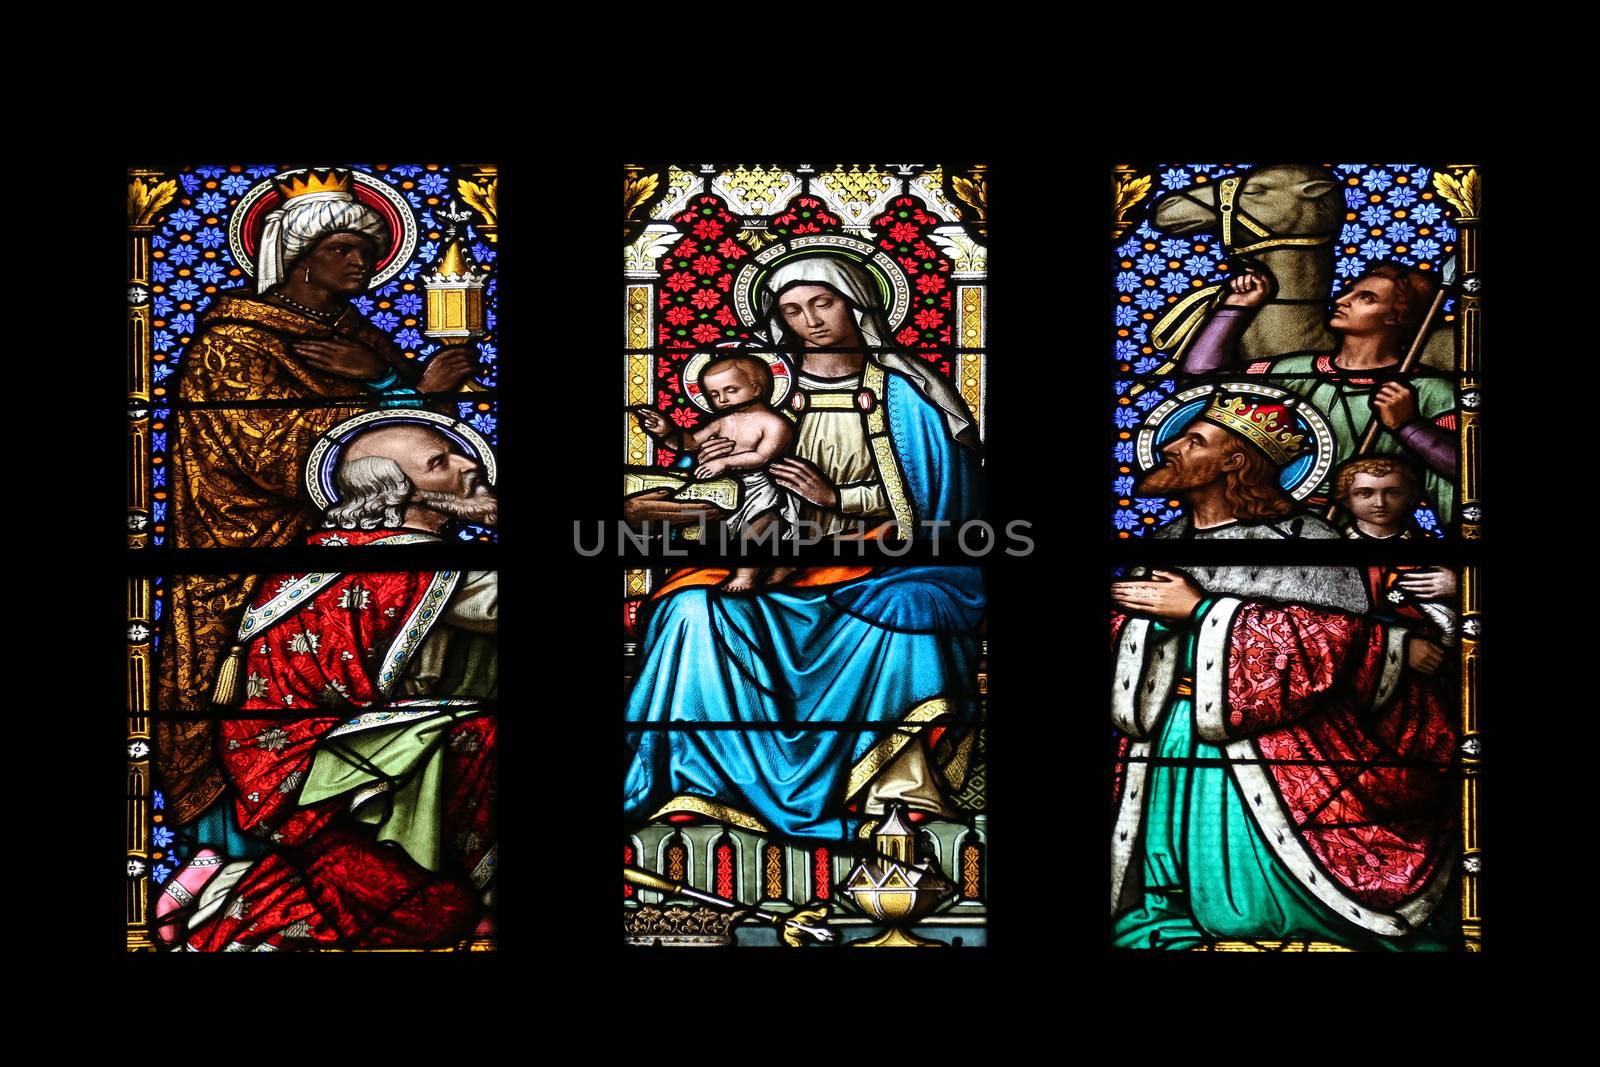 Nativity Scene, Adoration of the Magi, stained glass window in parish church of Saint Mark in Zagreb, Croatia